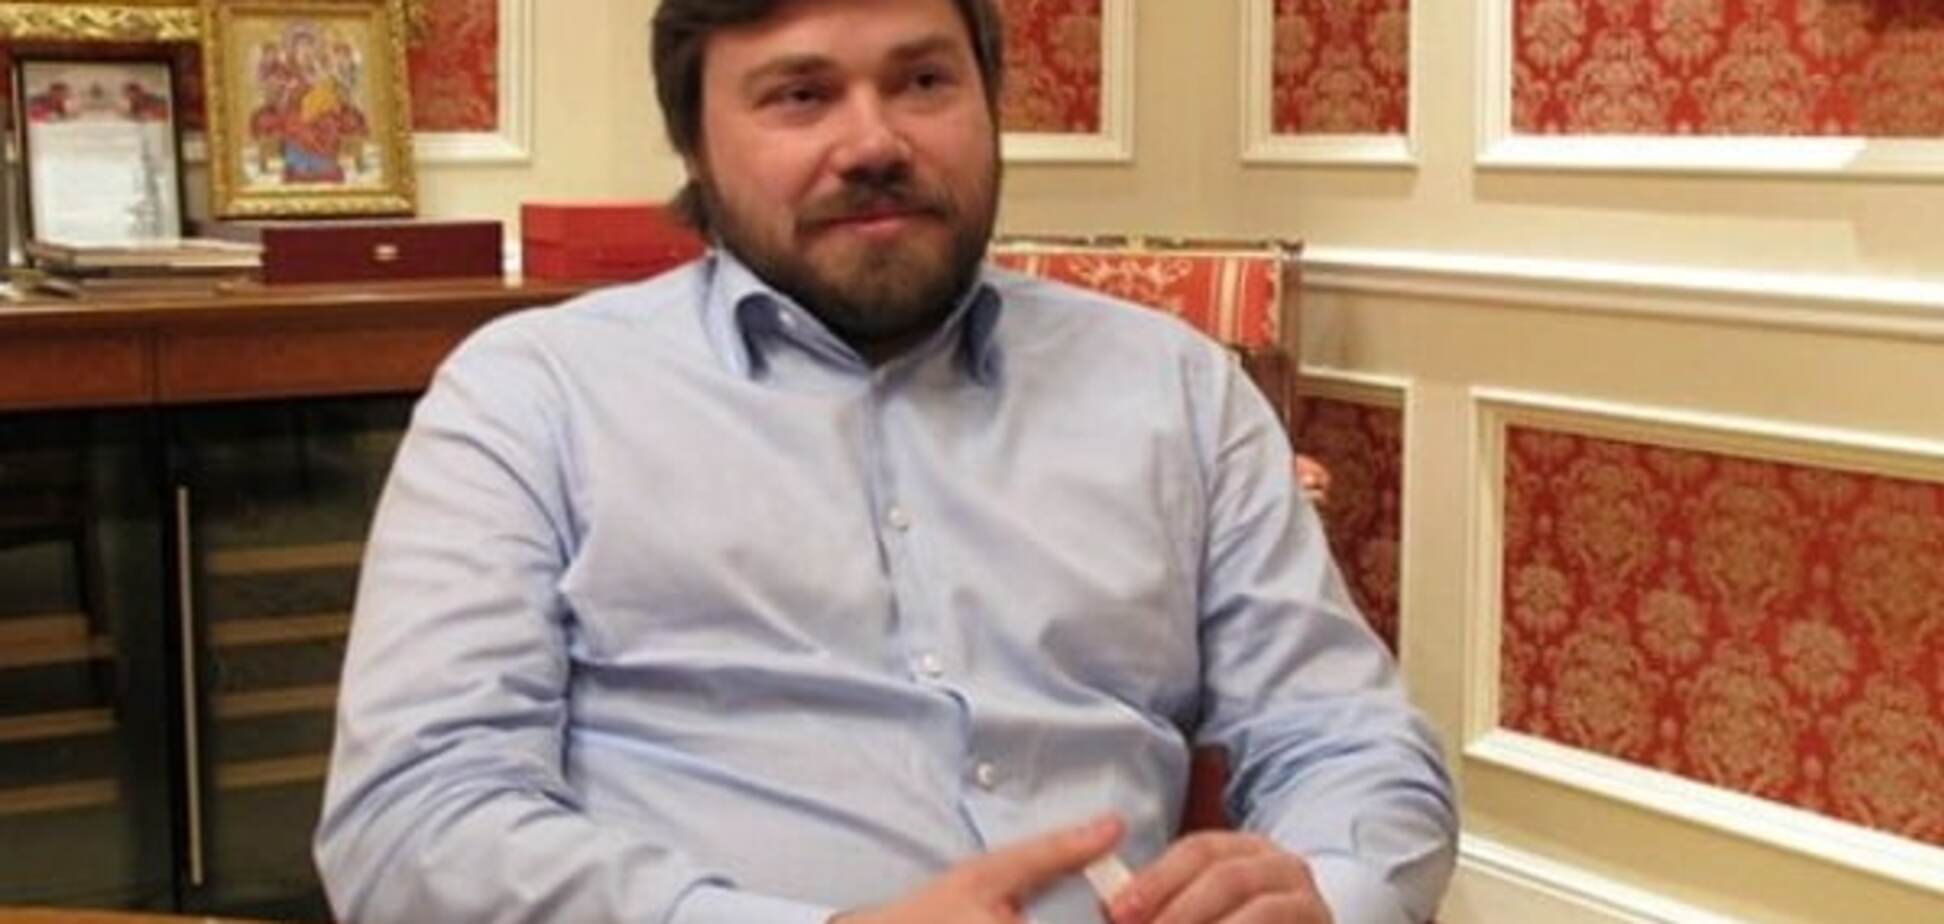 Константин Малофеев